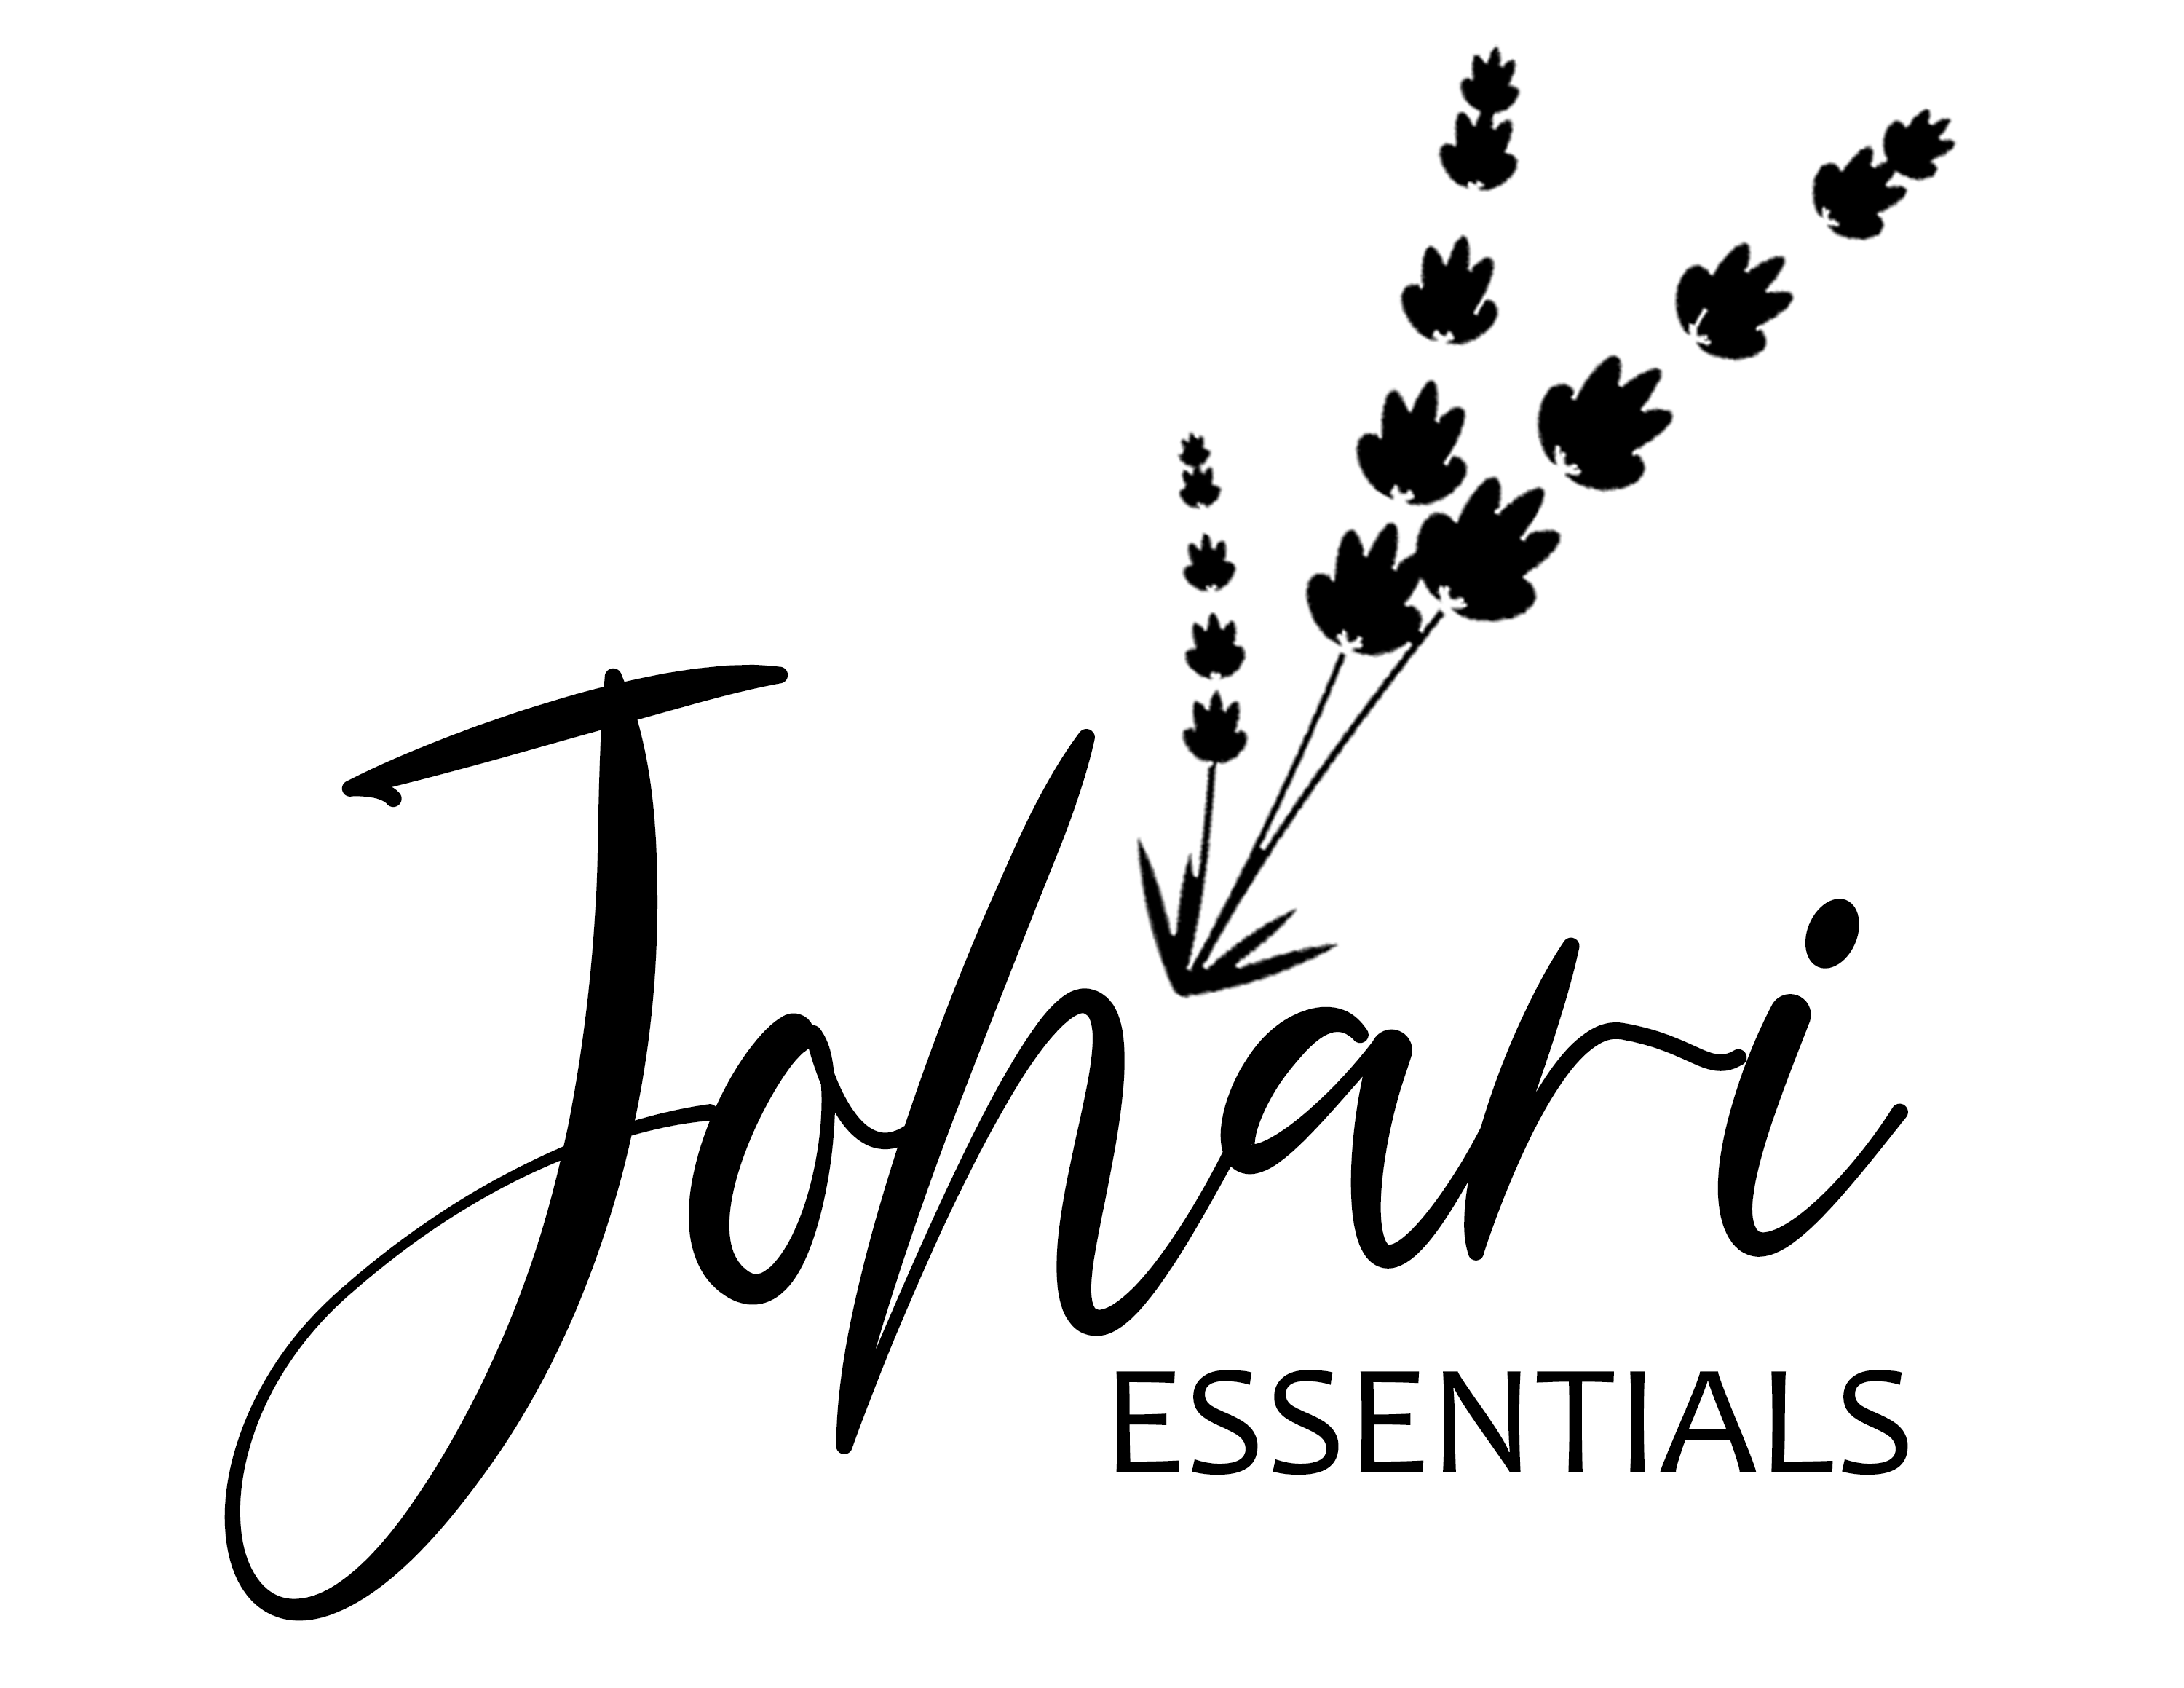 Johari Essentials